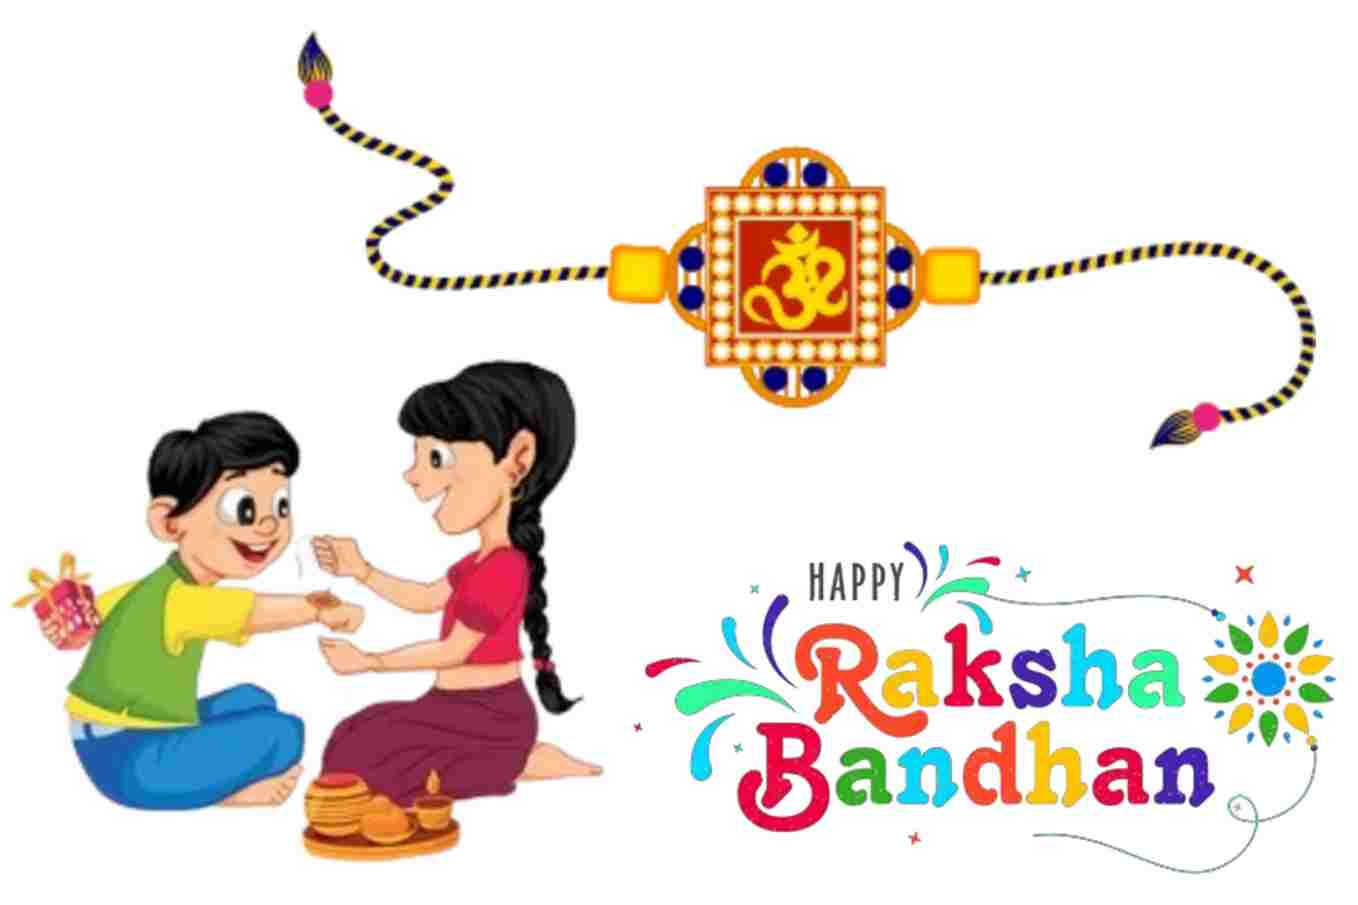 Celebrating the Sacred Bond of Raksha Bandhan